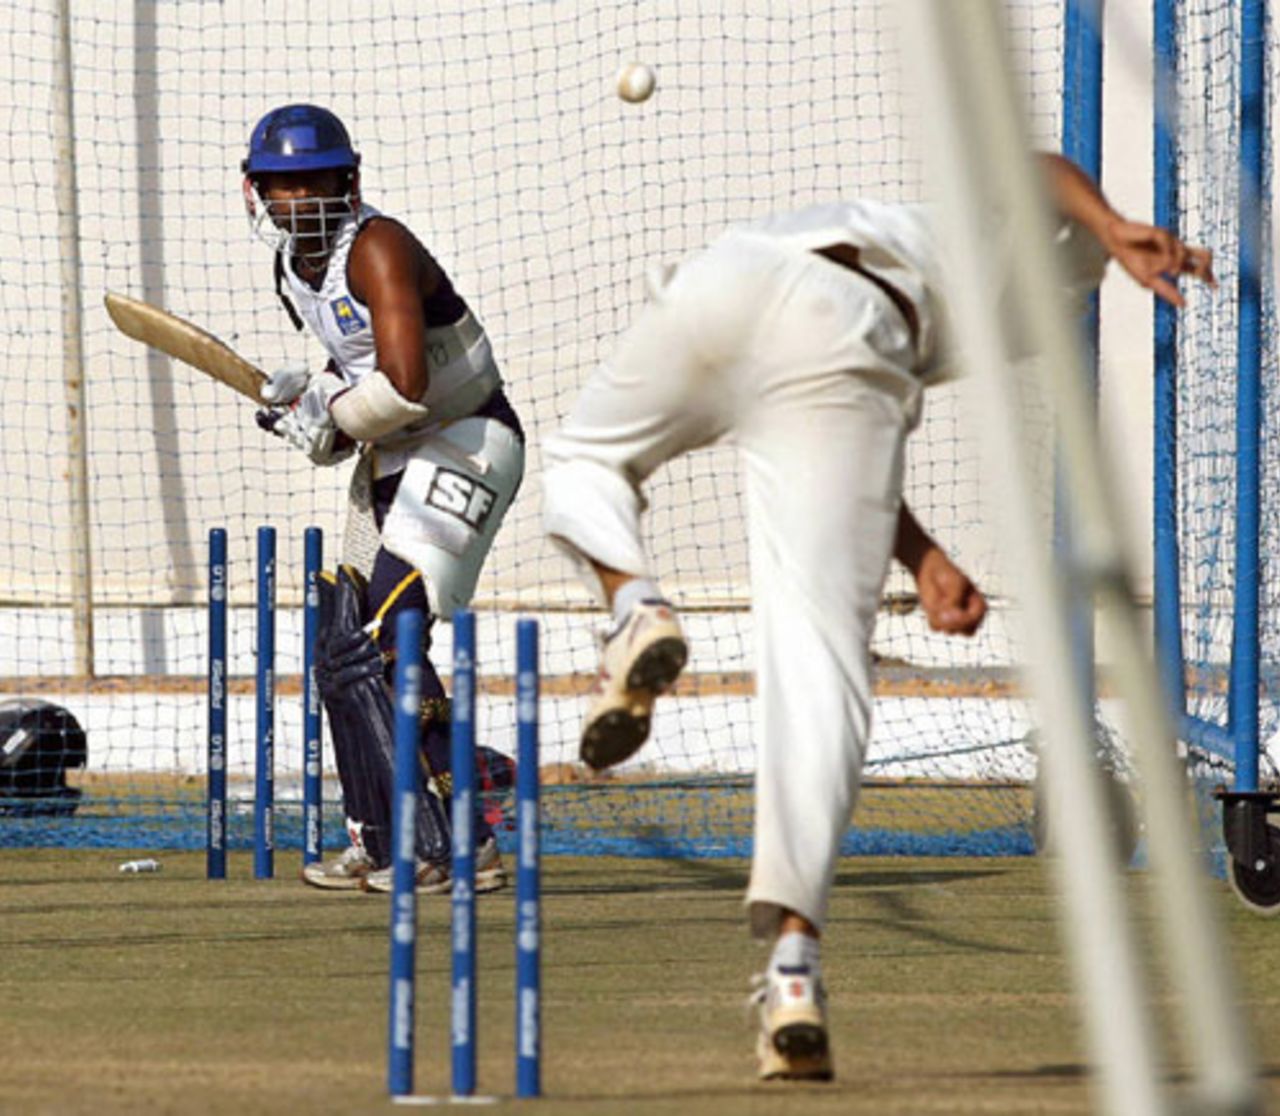 Malinga Bandara faces up in the nets, Jaipur, October 17, 2006